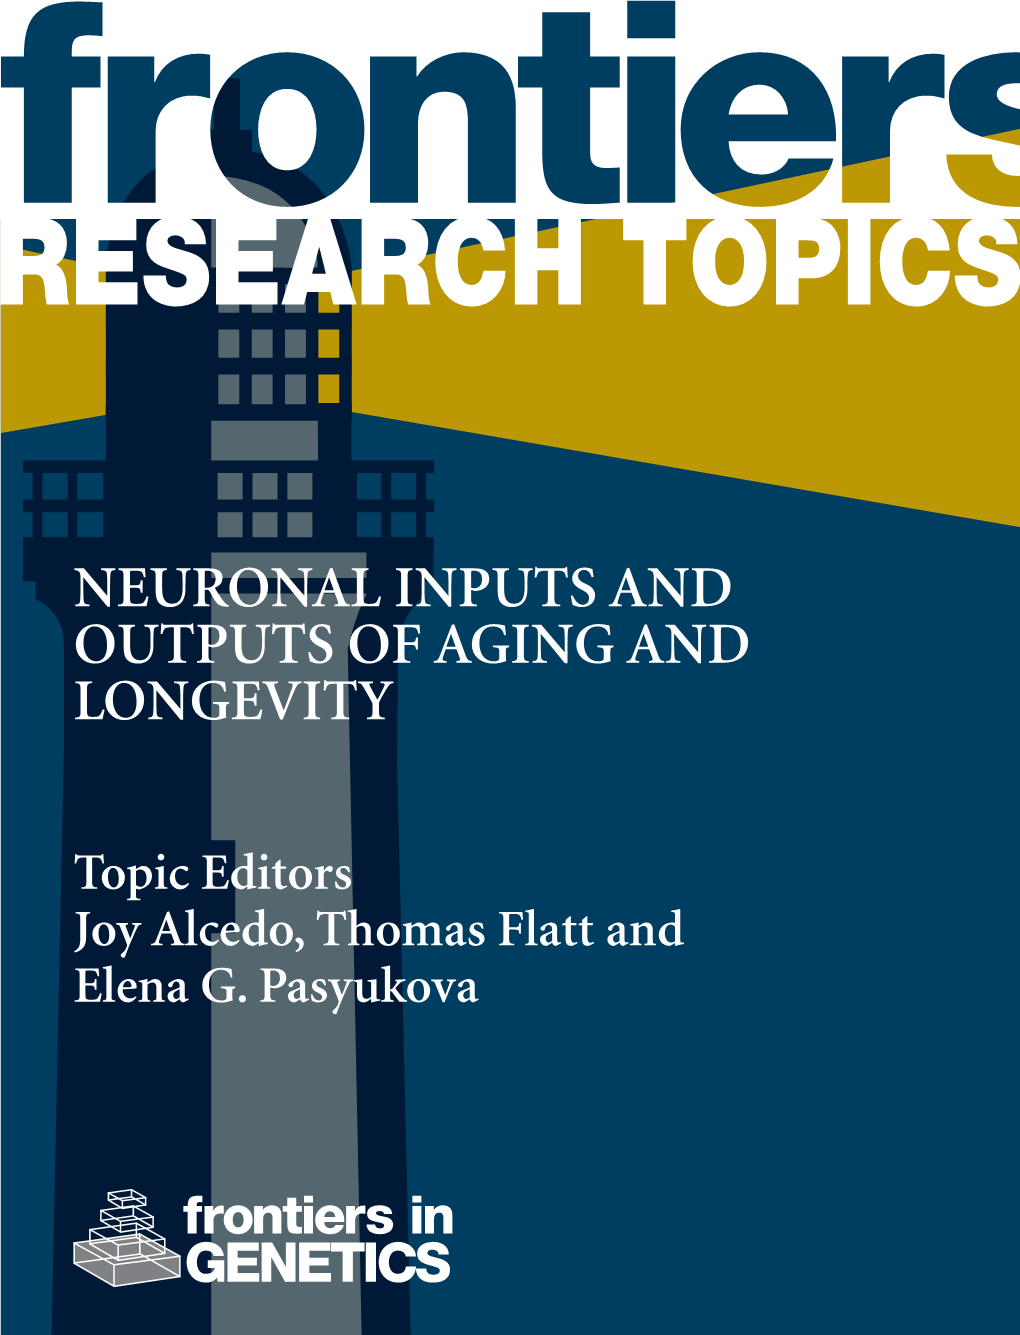 Topic Editors Joy Alcedo, Thomas Flatt and Elena G. Pasyukova